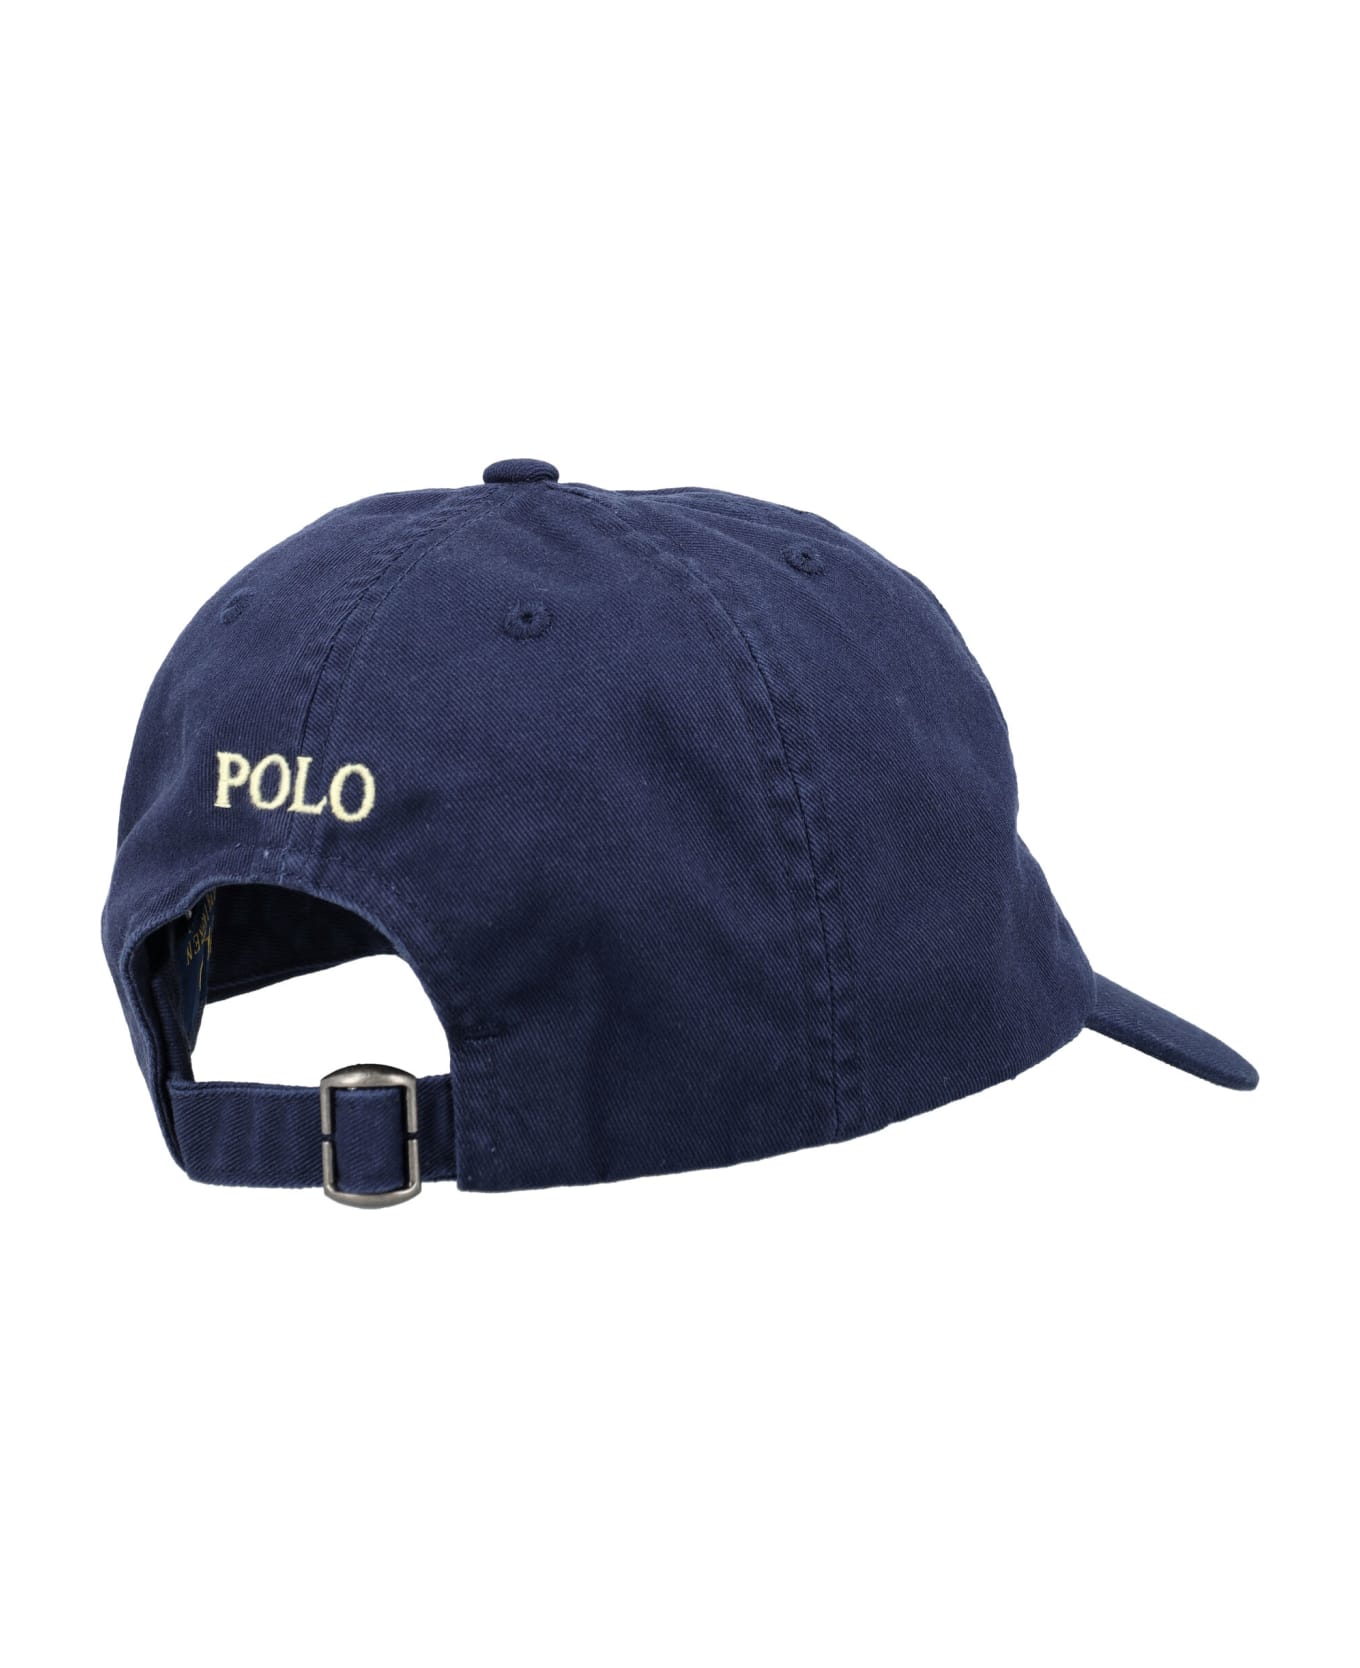 Polo Ralph Lauren Cotton Chino Baseball Cap - BLUE